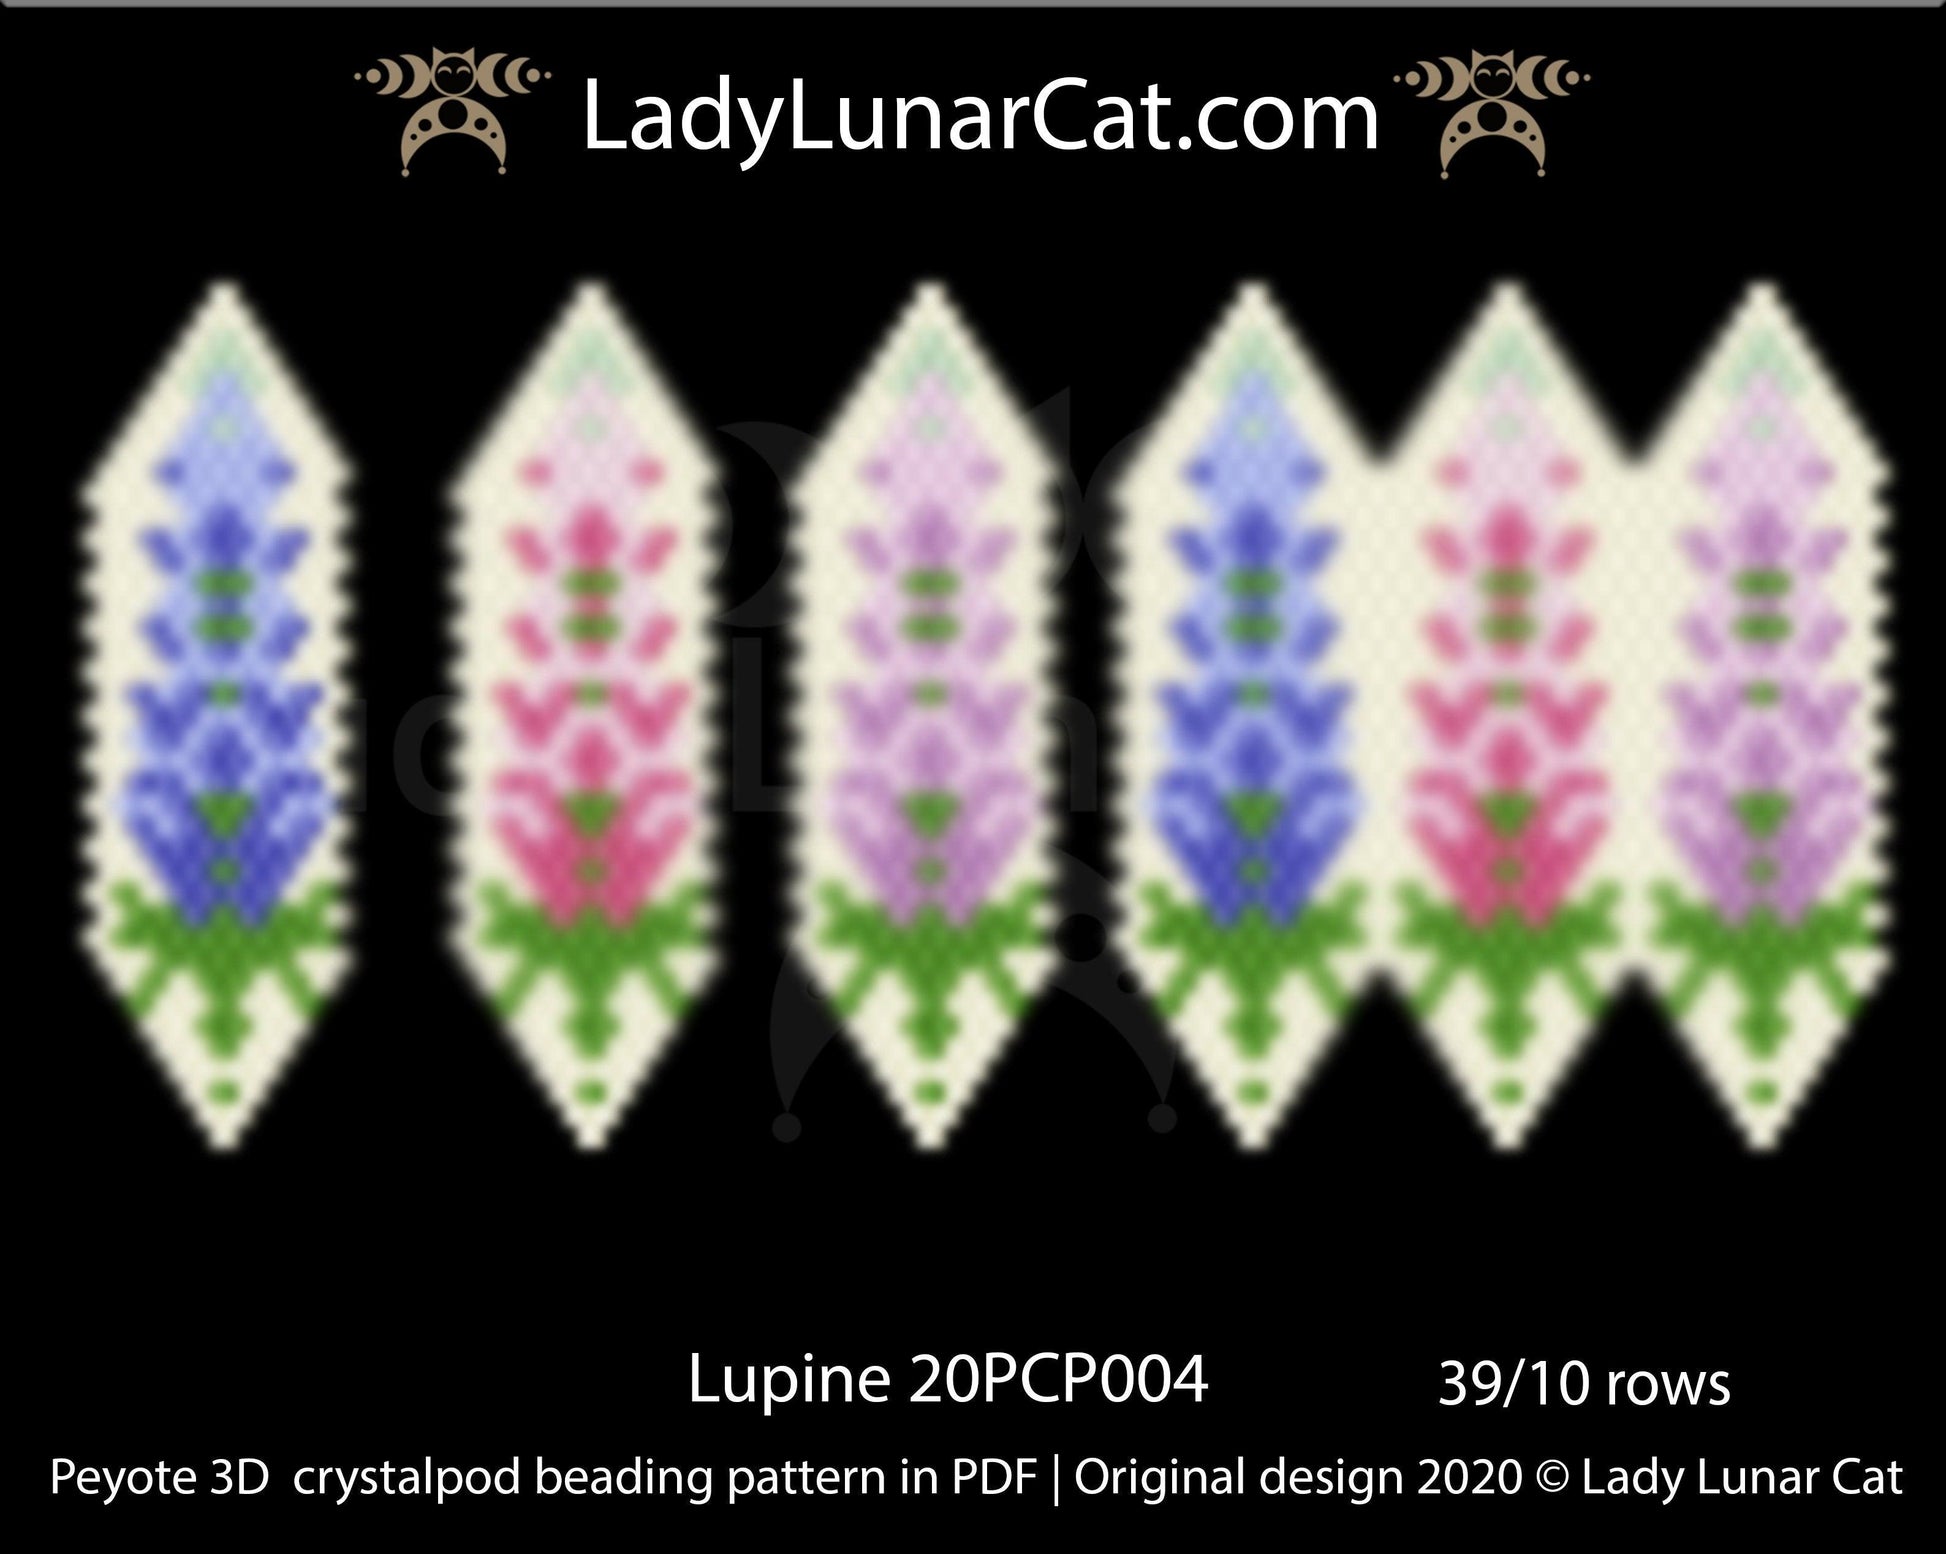 3d peyote pod pattern or crystalpod pattern for beading Lupine 20PCP004 LadyLunarCat